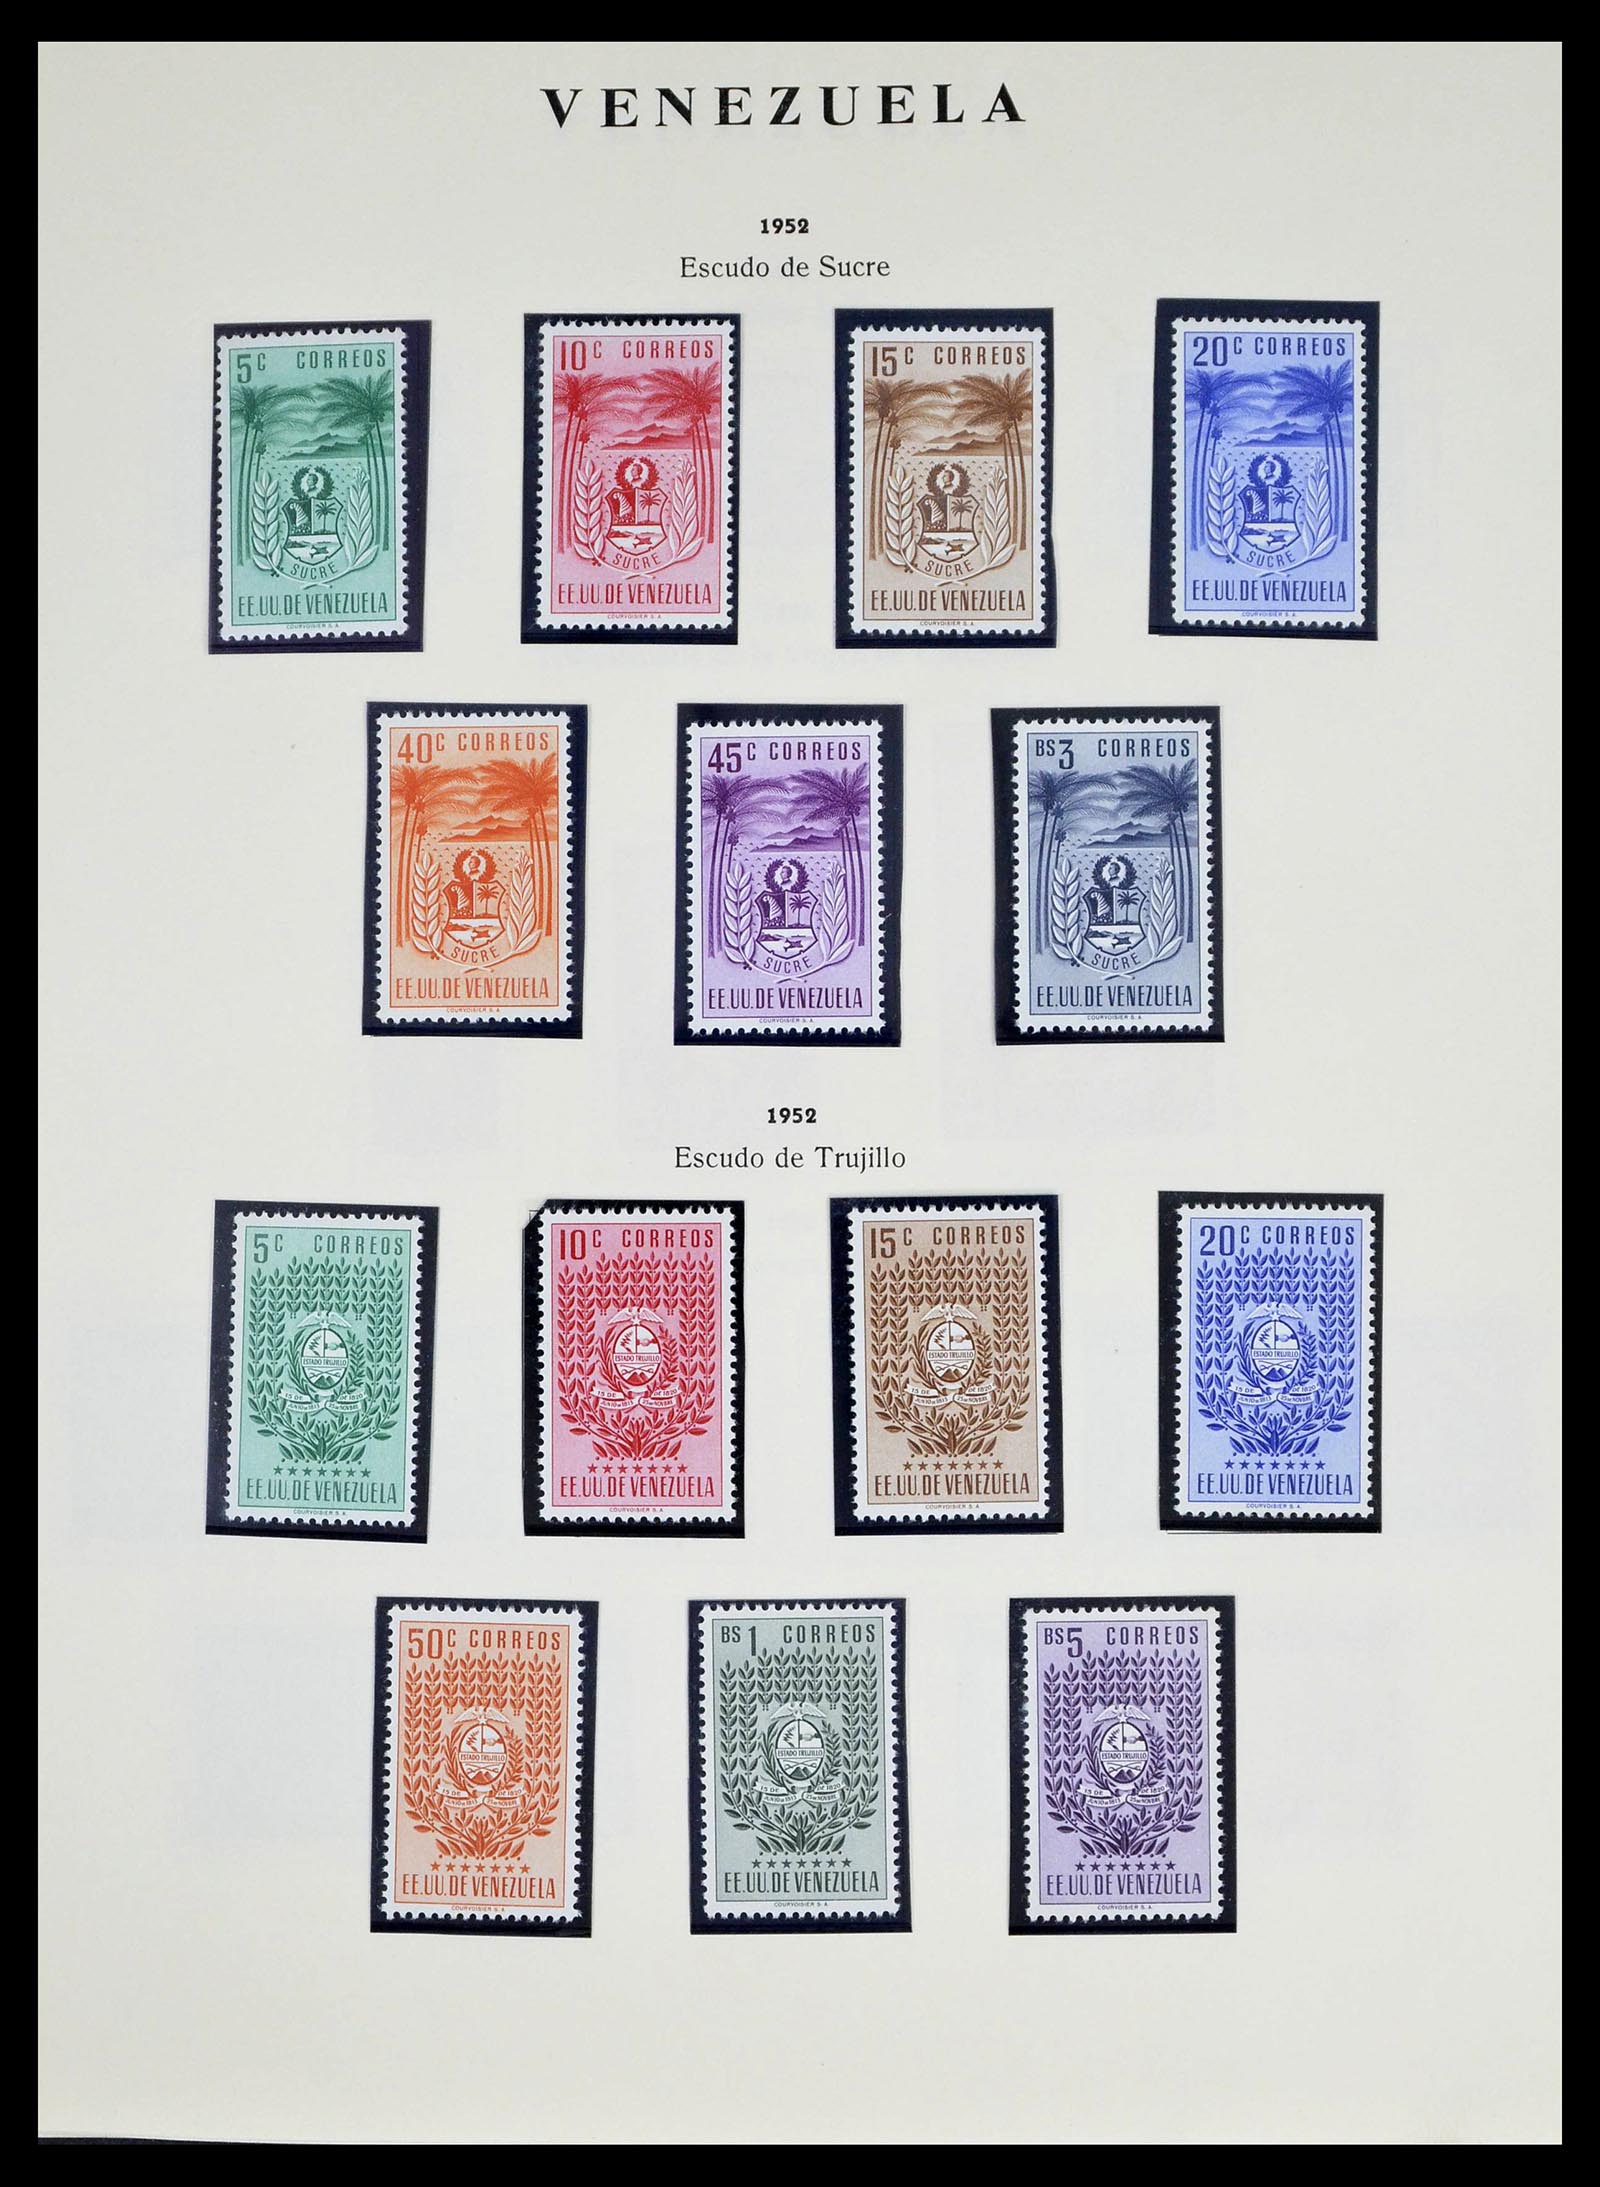 39223 0029 - Stamp collection 39223 Venezuela 1859-1984.